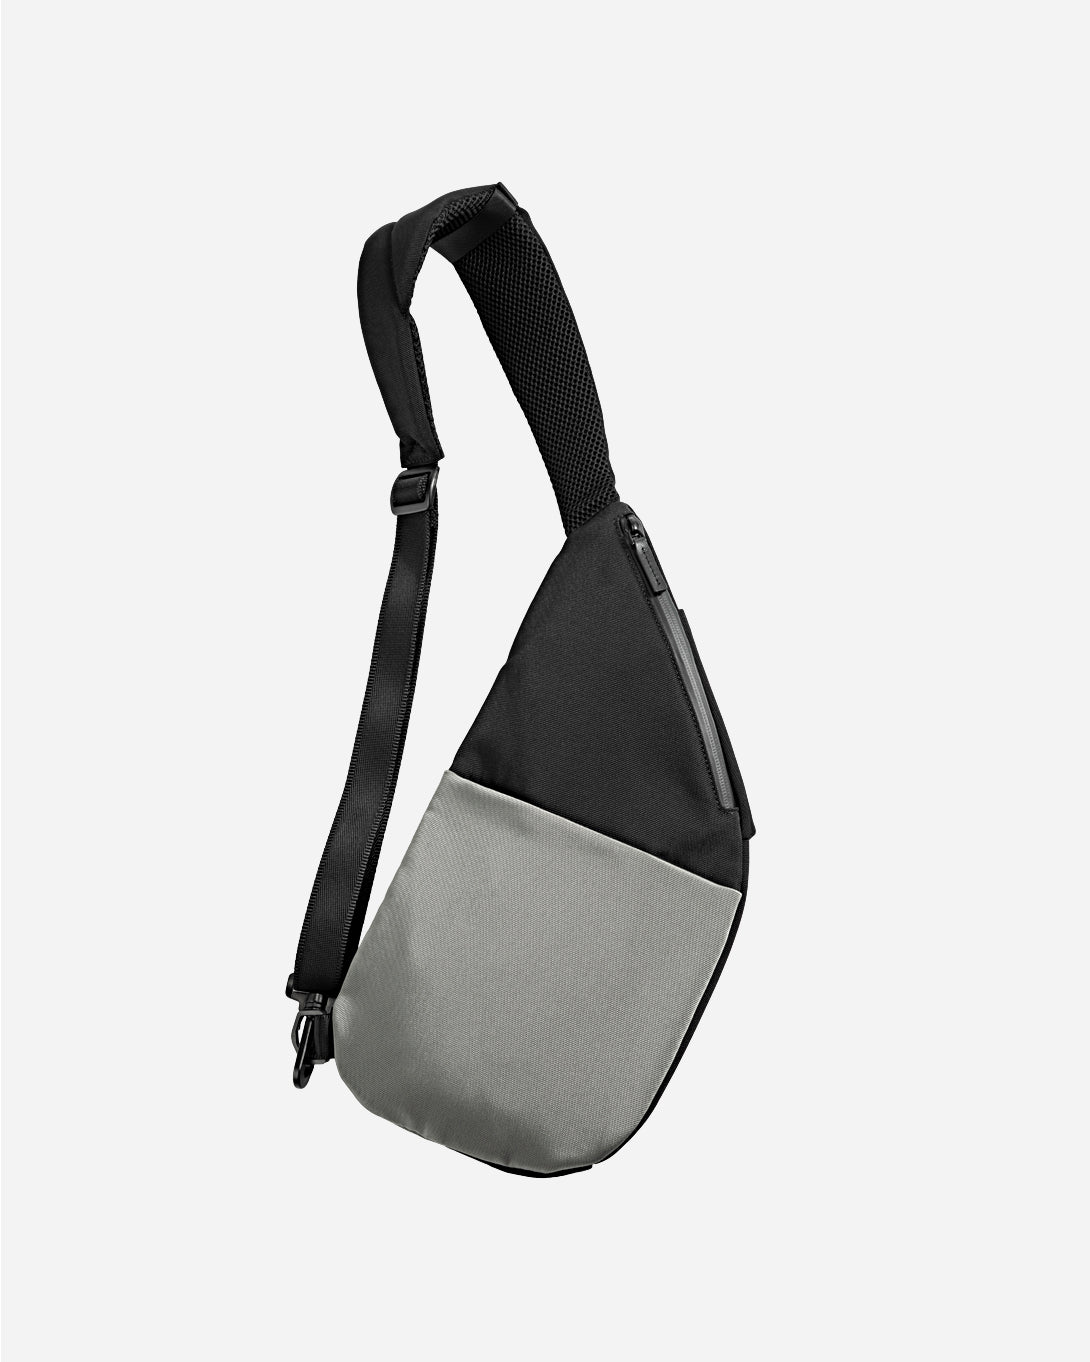 Charcoal City Sling Bag ONS Mens Utility Organizational Waterproof Crossbody Bag